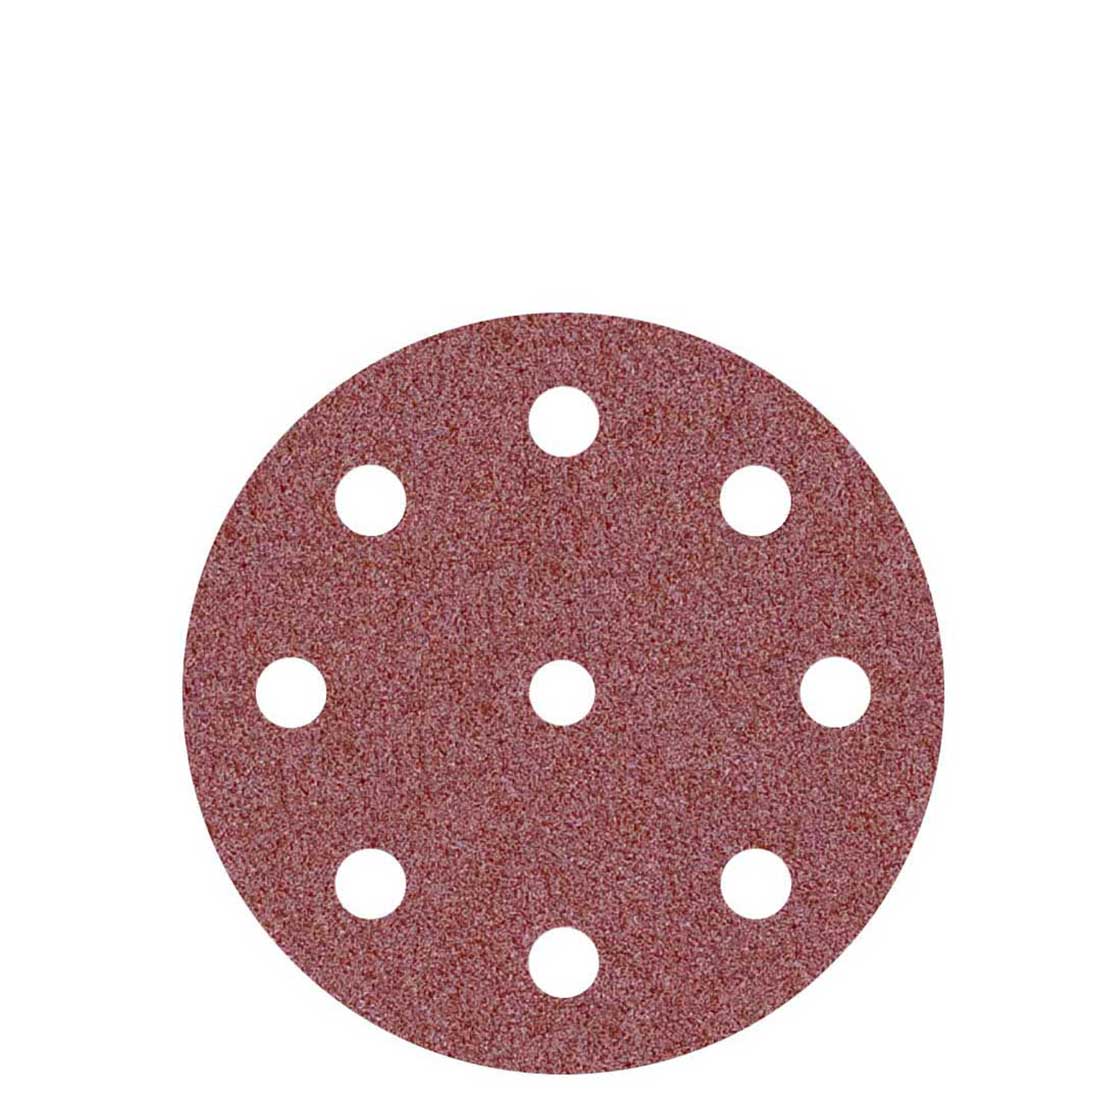 MioTools hook & loop sanding discs for random orbital sanders, G24–240, Ø 125 mm / 9 hole / aluminium oxide